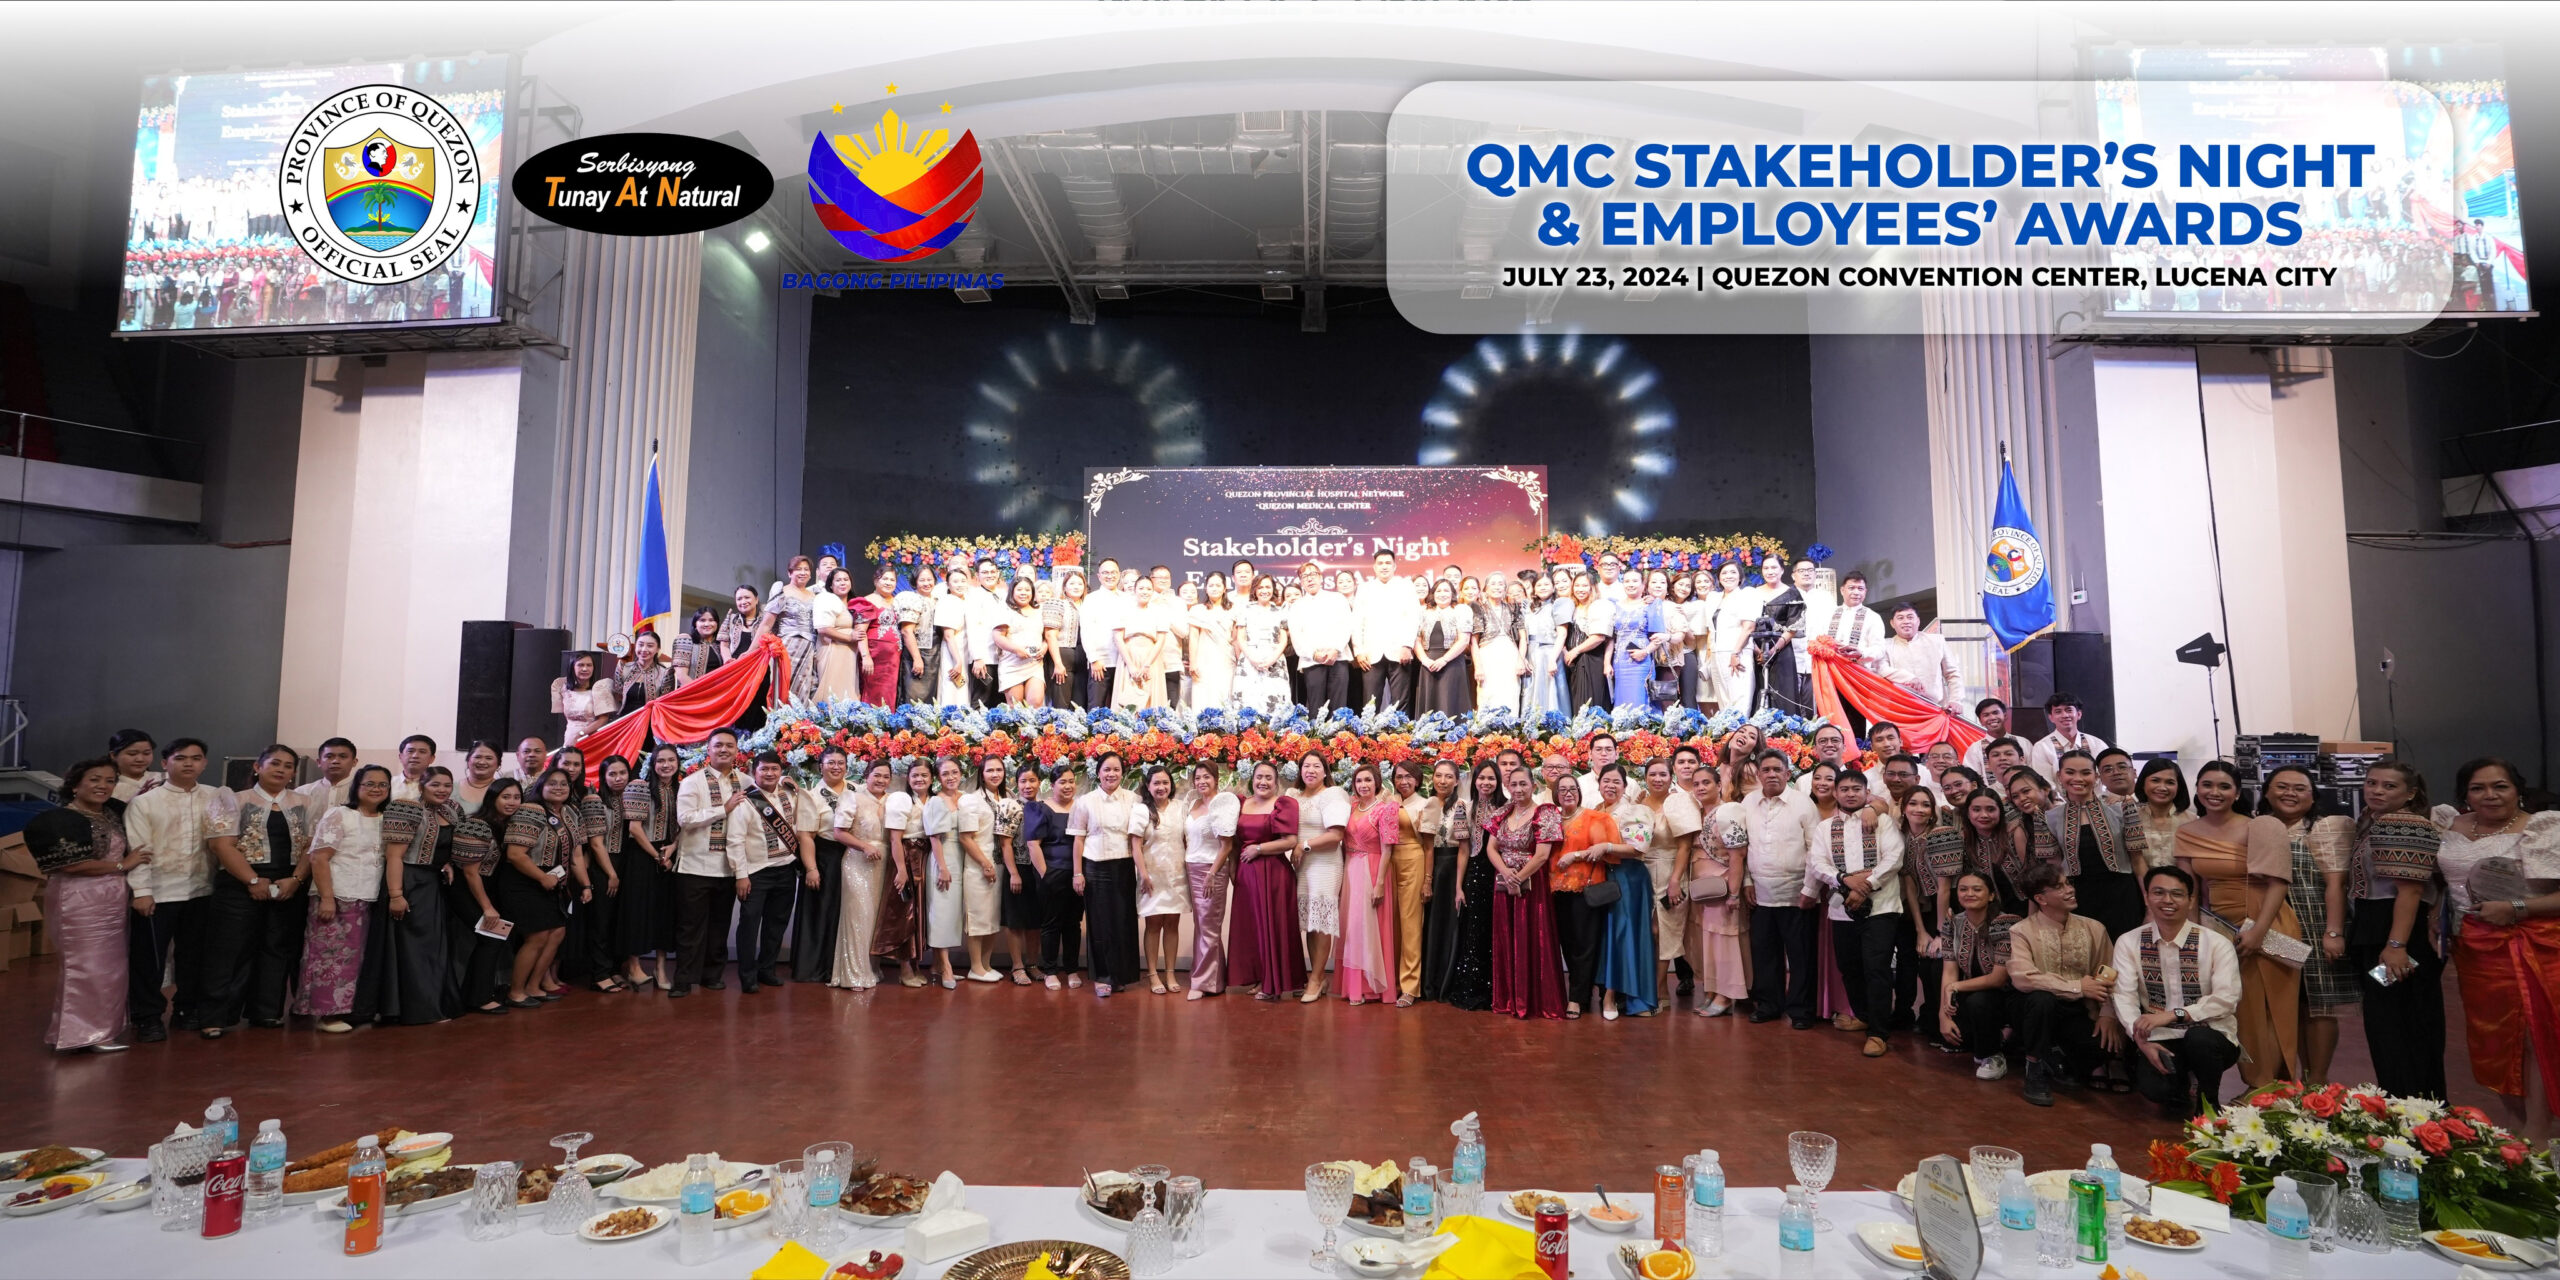 QMC Stakeholder’s Night & Employees’ Awards | July 23, 2024